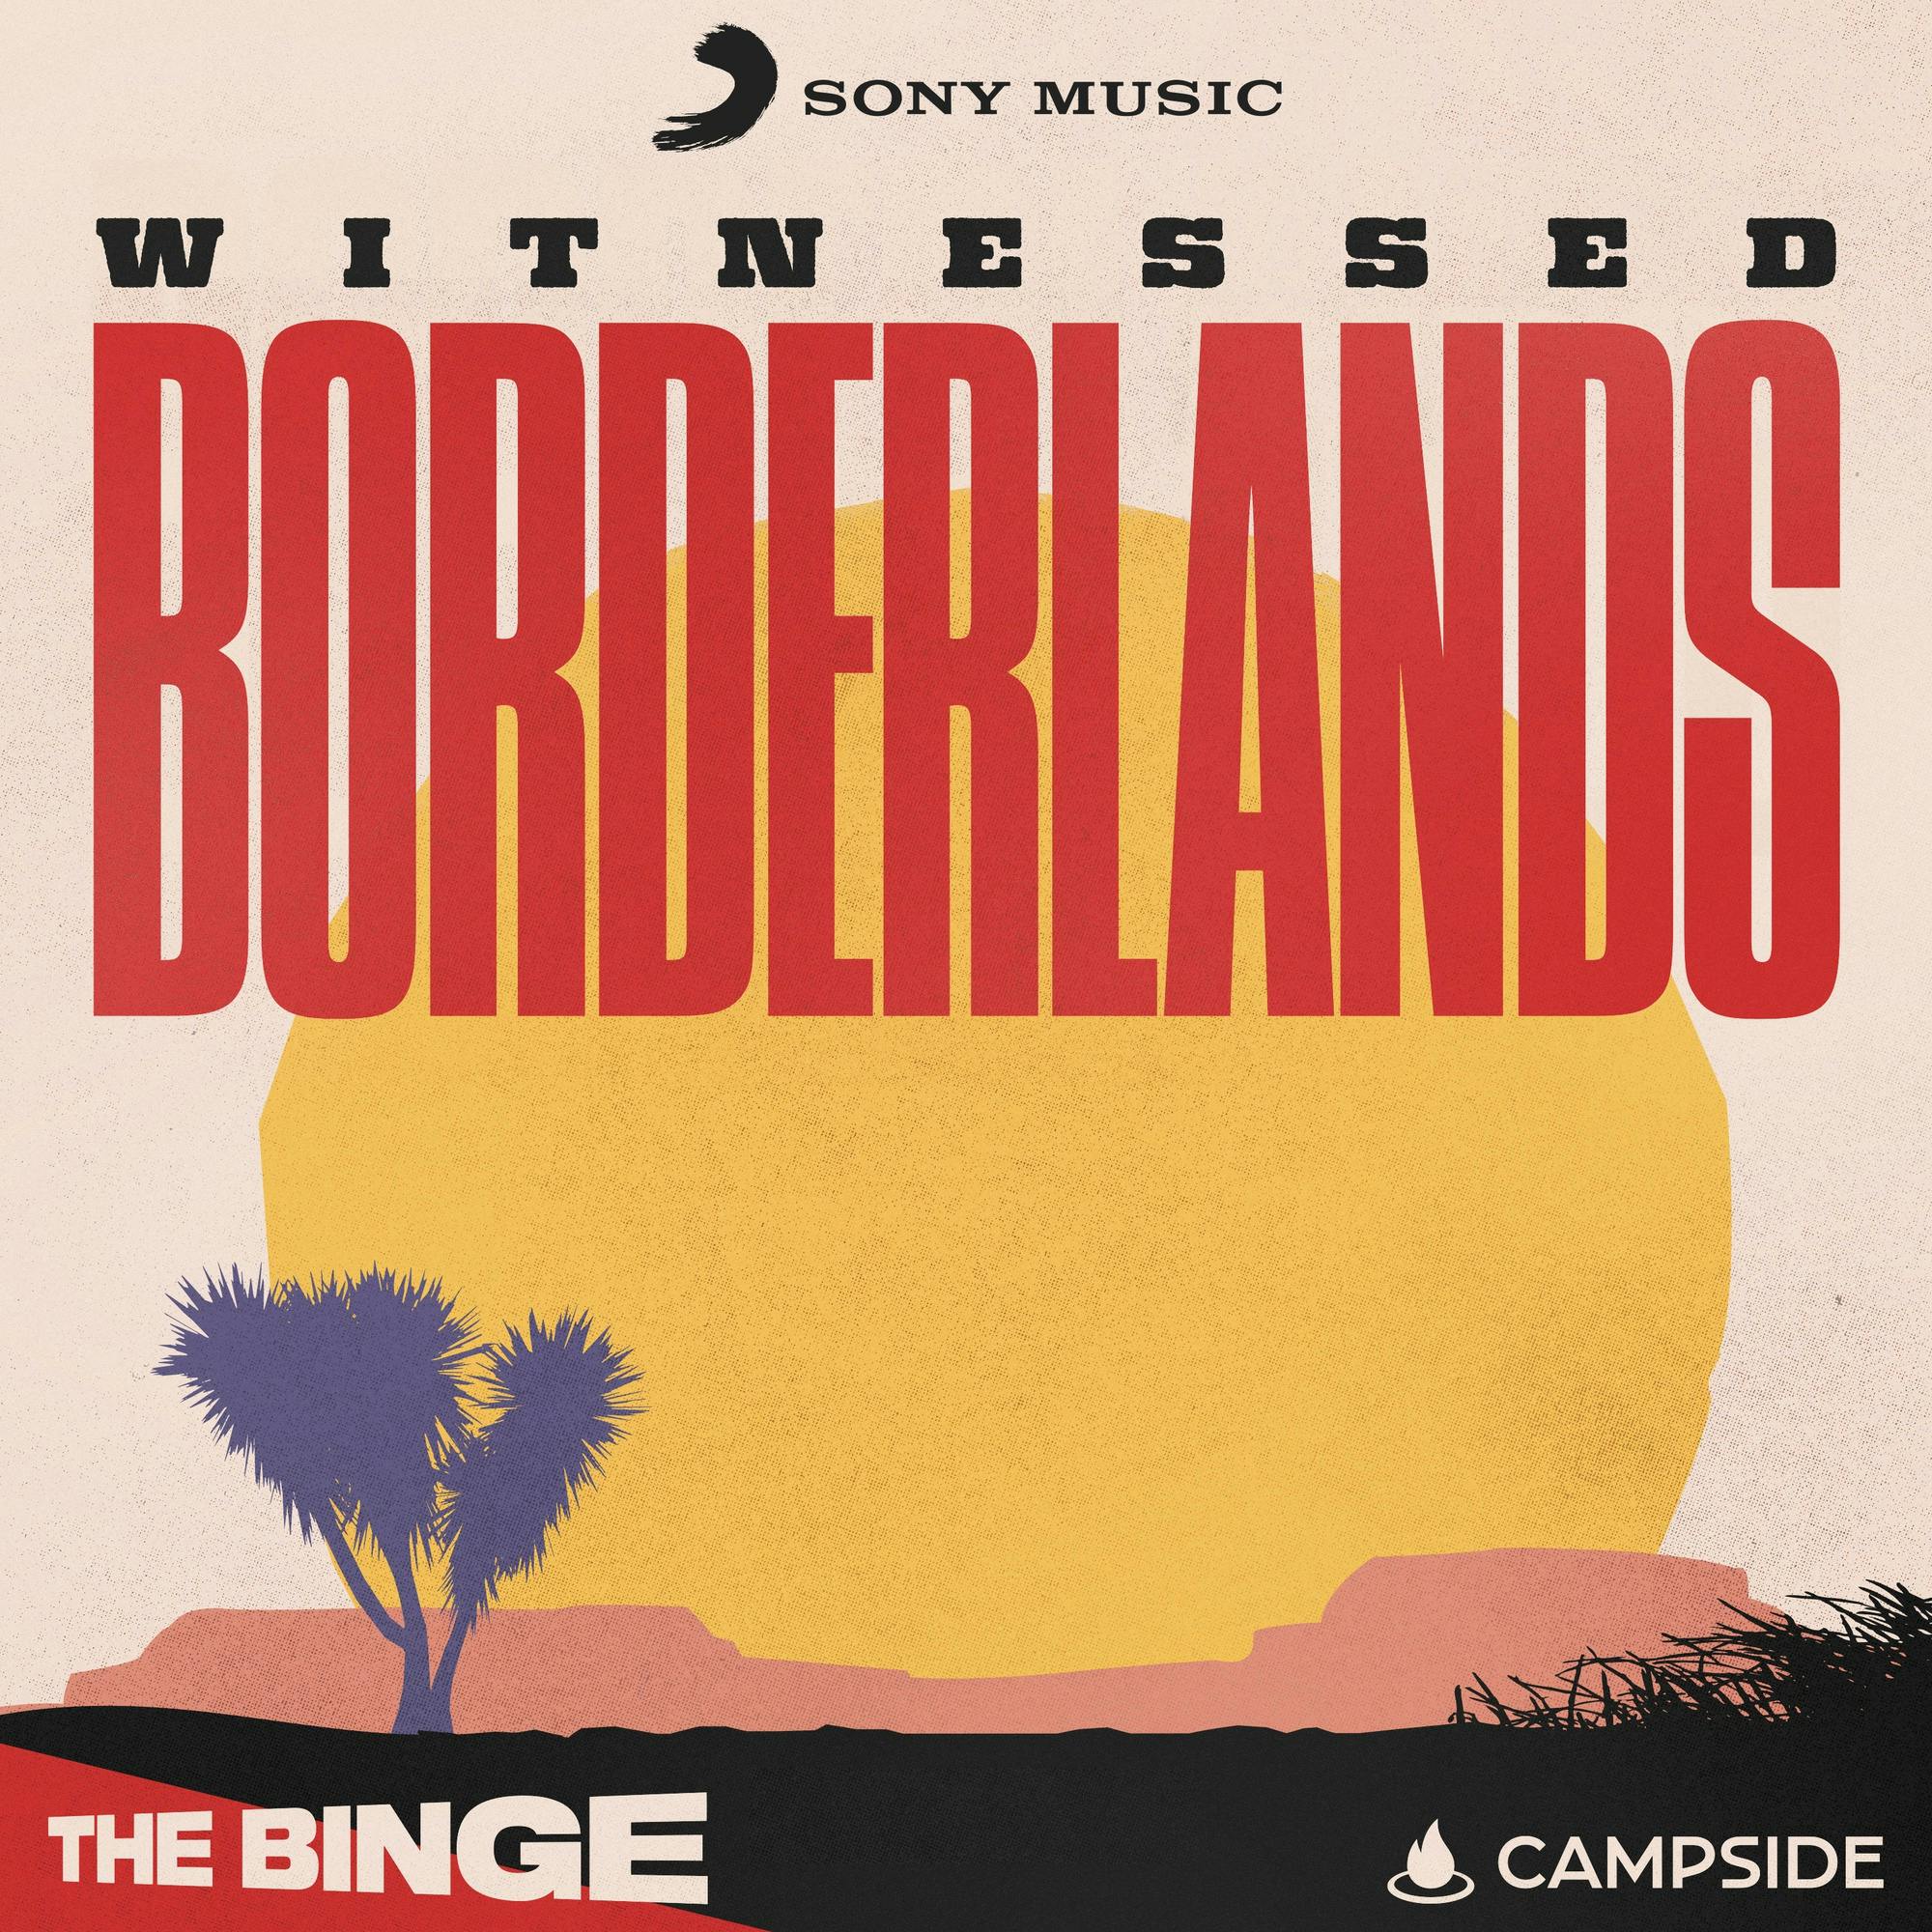 Borderlands | 1. A Wild Place